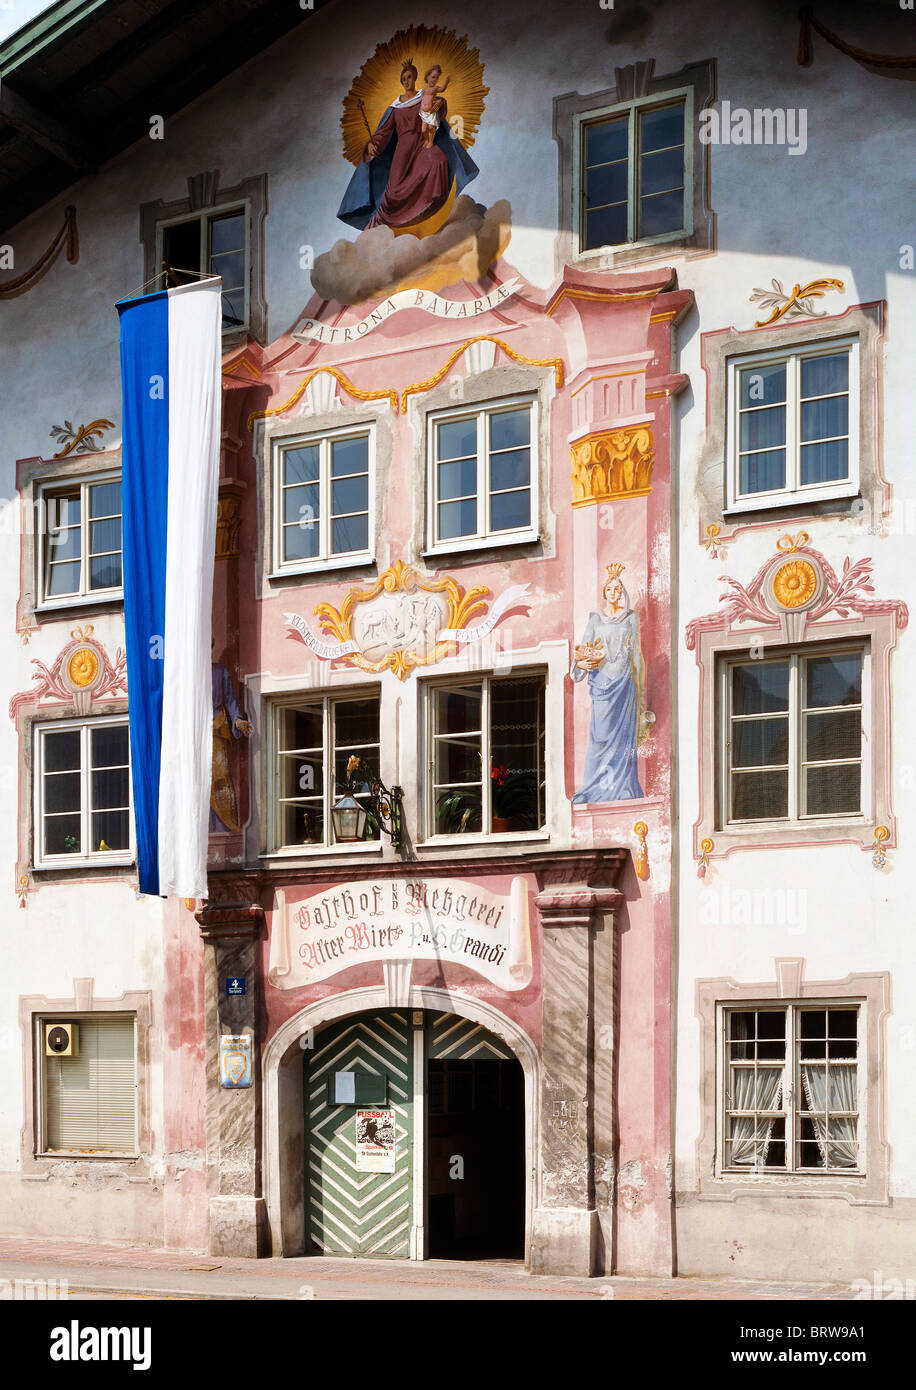 Inn, Alter Wirt, German for Old Host or Publican, Eschenlohe, Upper Bavaria, Bavaria, Germany, Europe Stock Photo